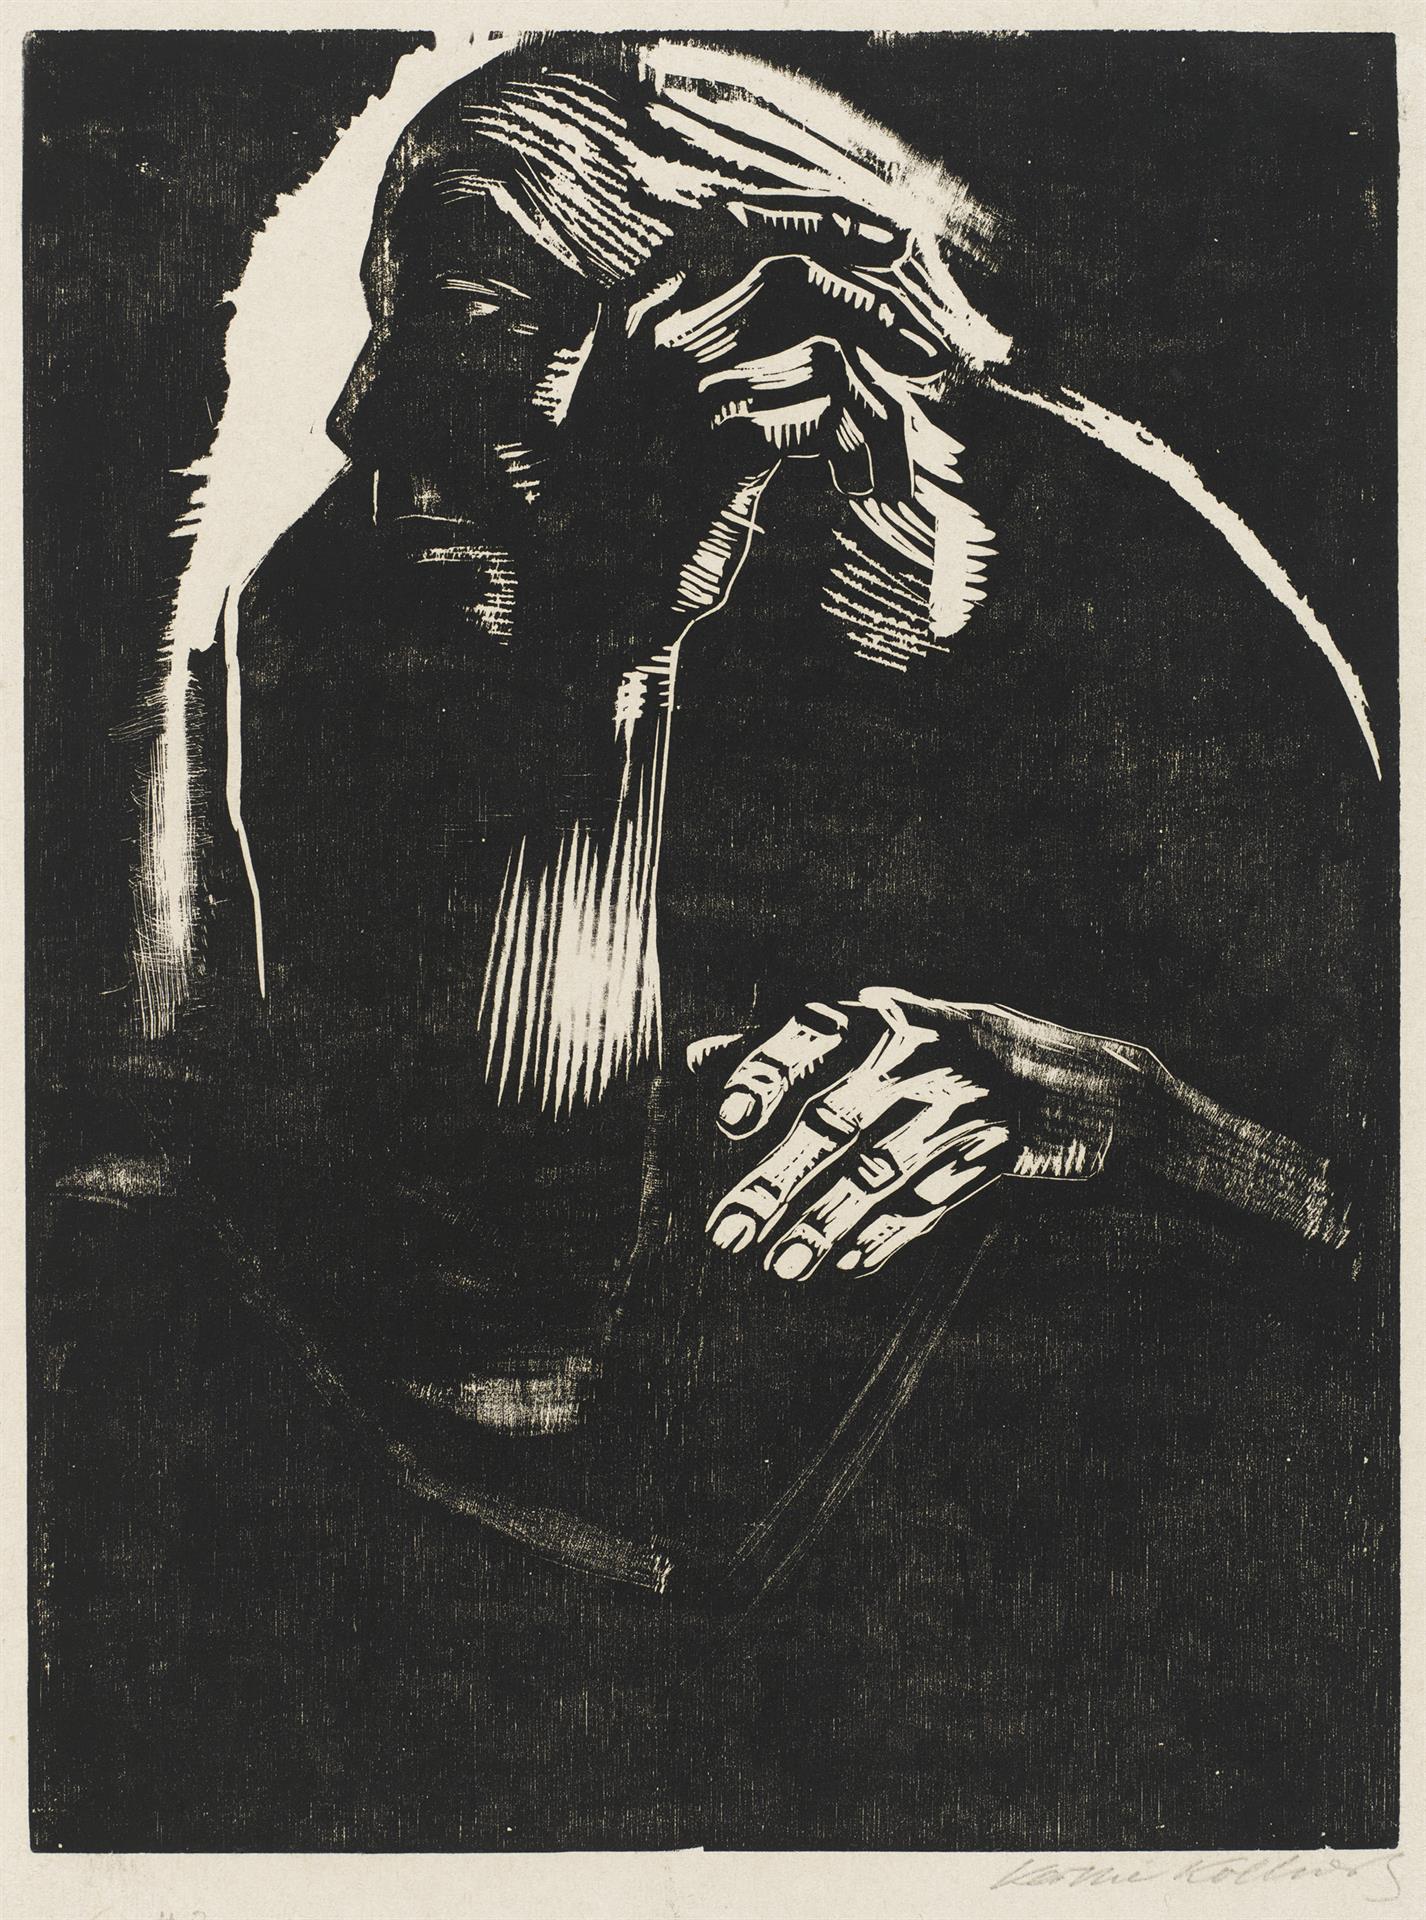 Käthe Kollwitz, Autoportrait, 1924, gravure sur bois, Kn 203 IV